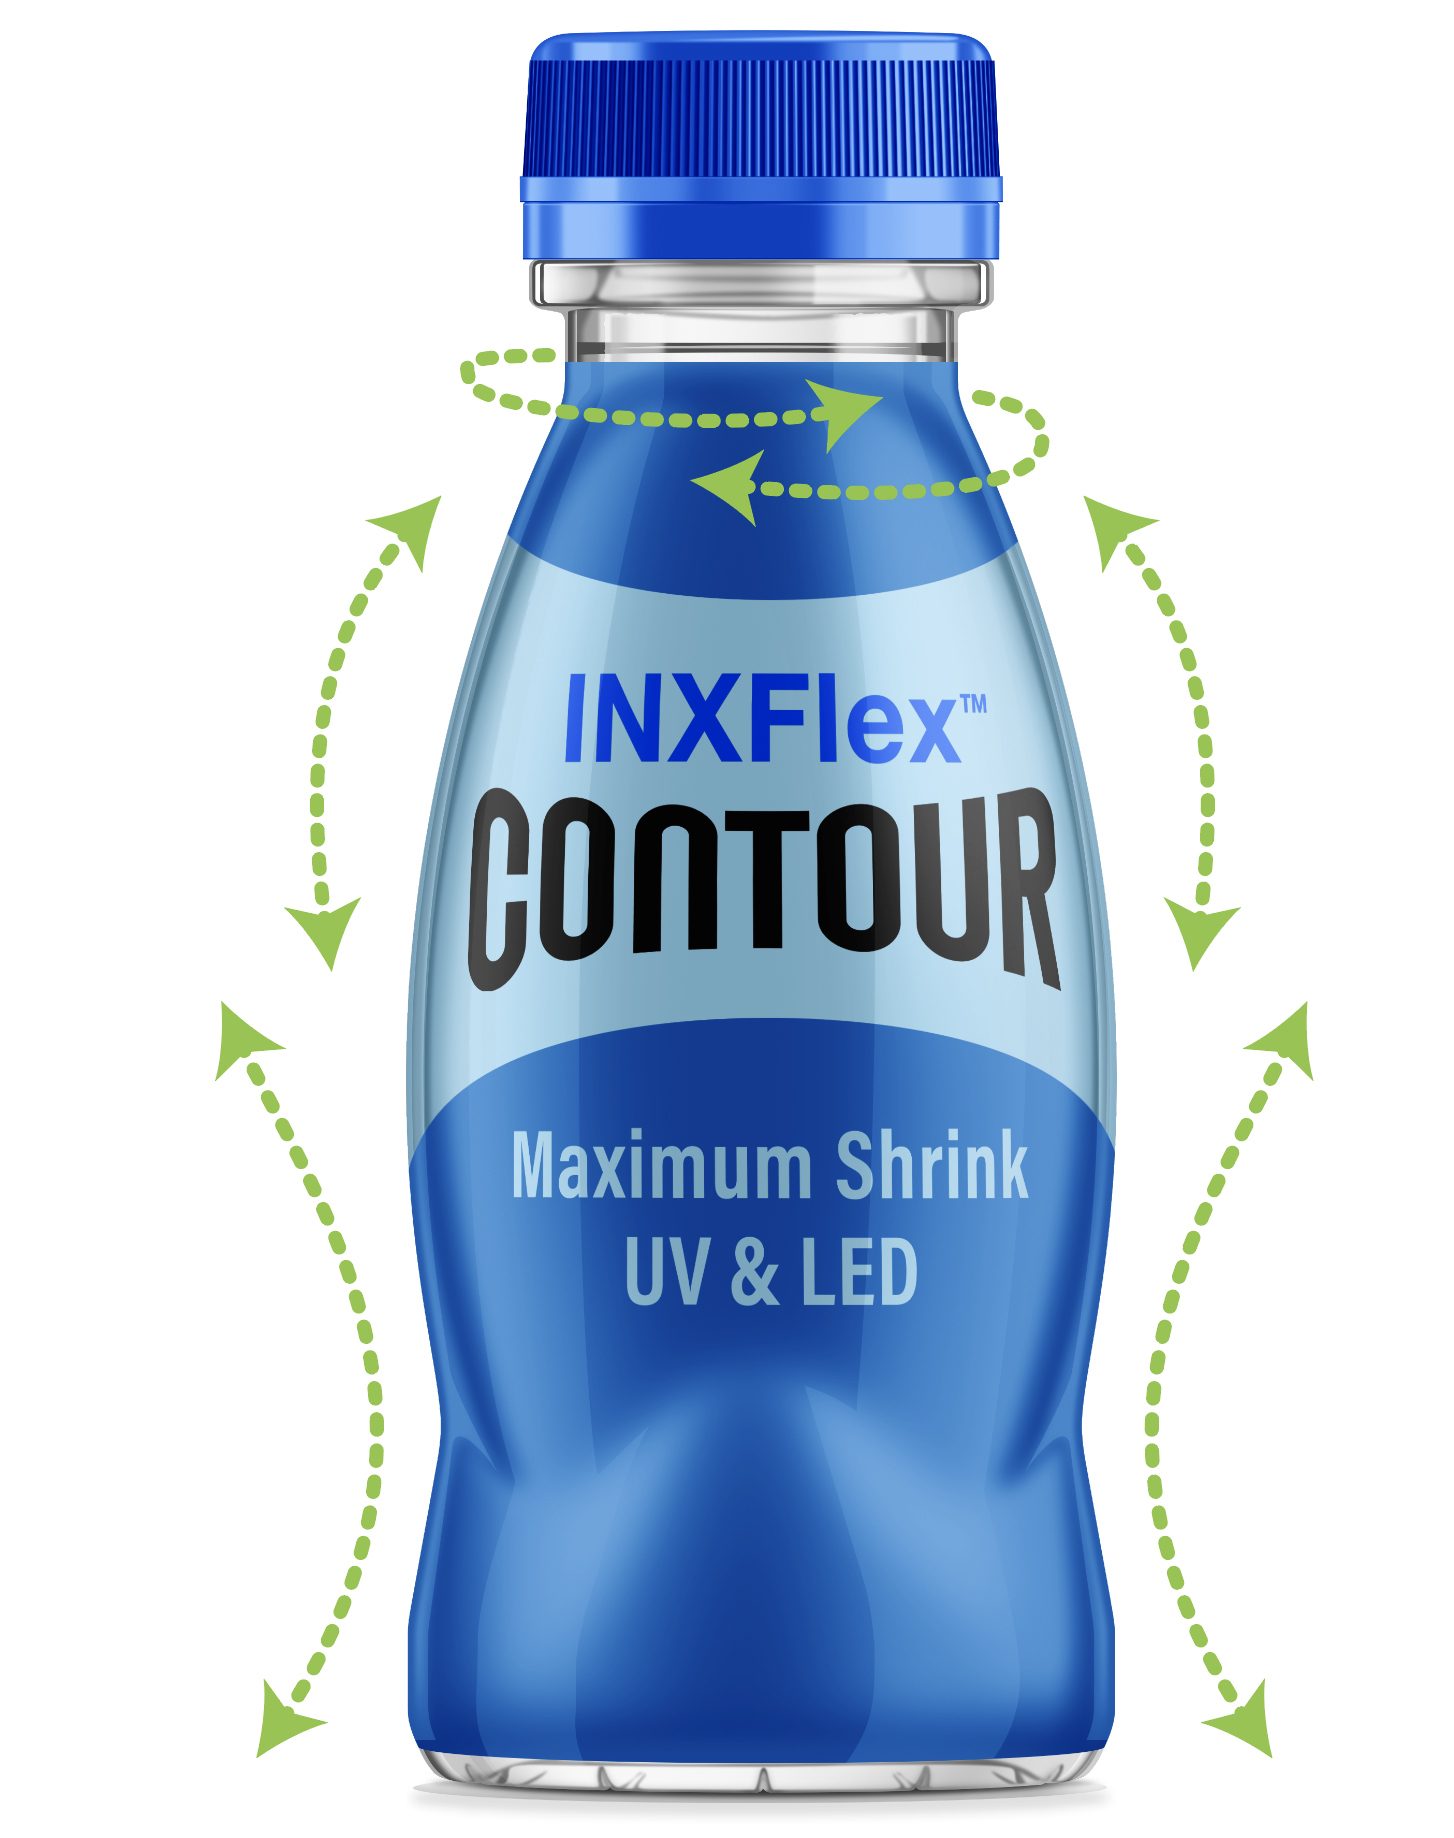 INXFlex Contour